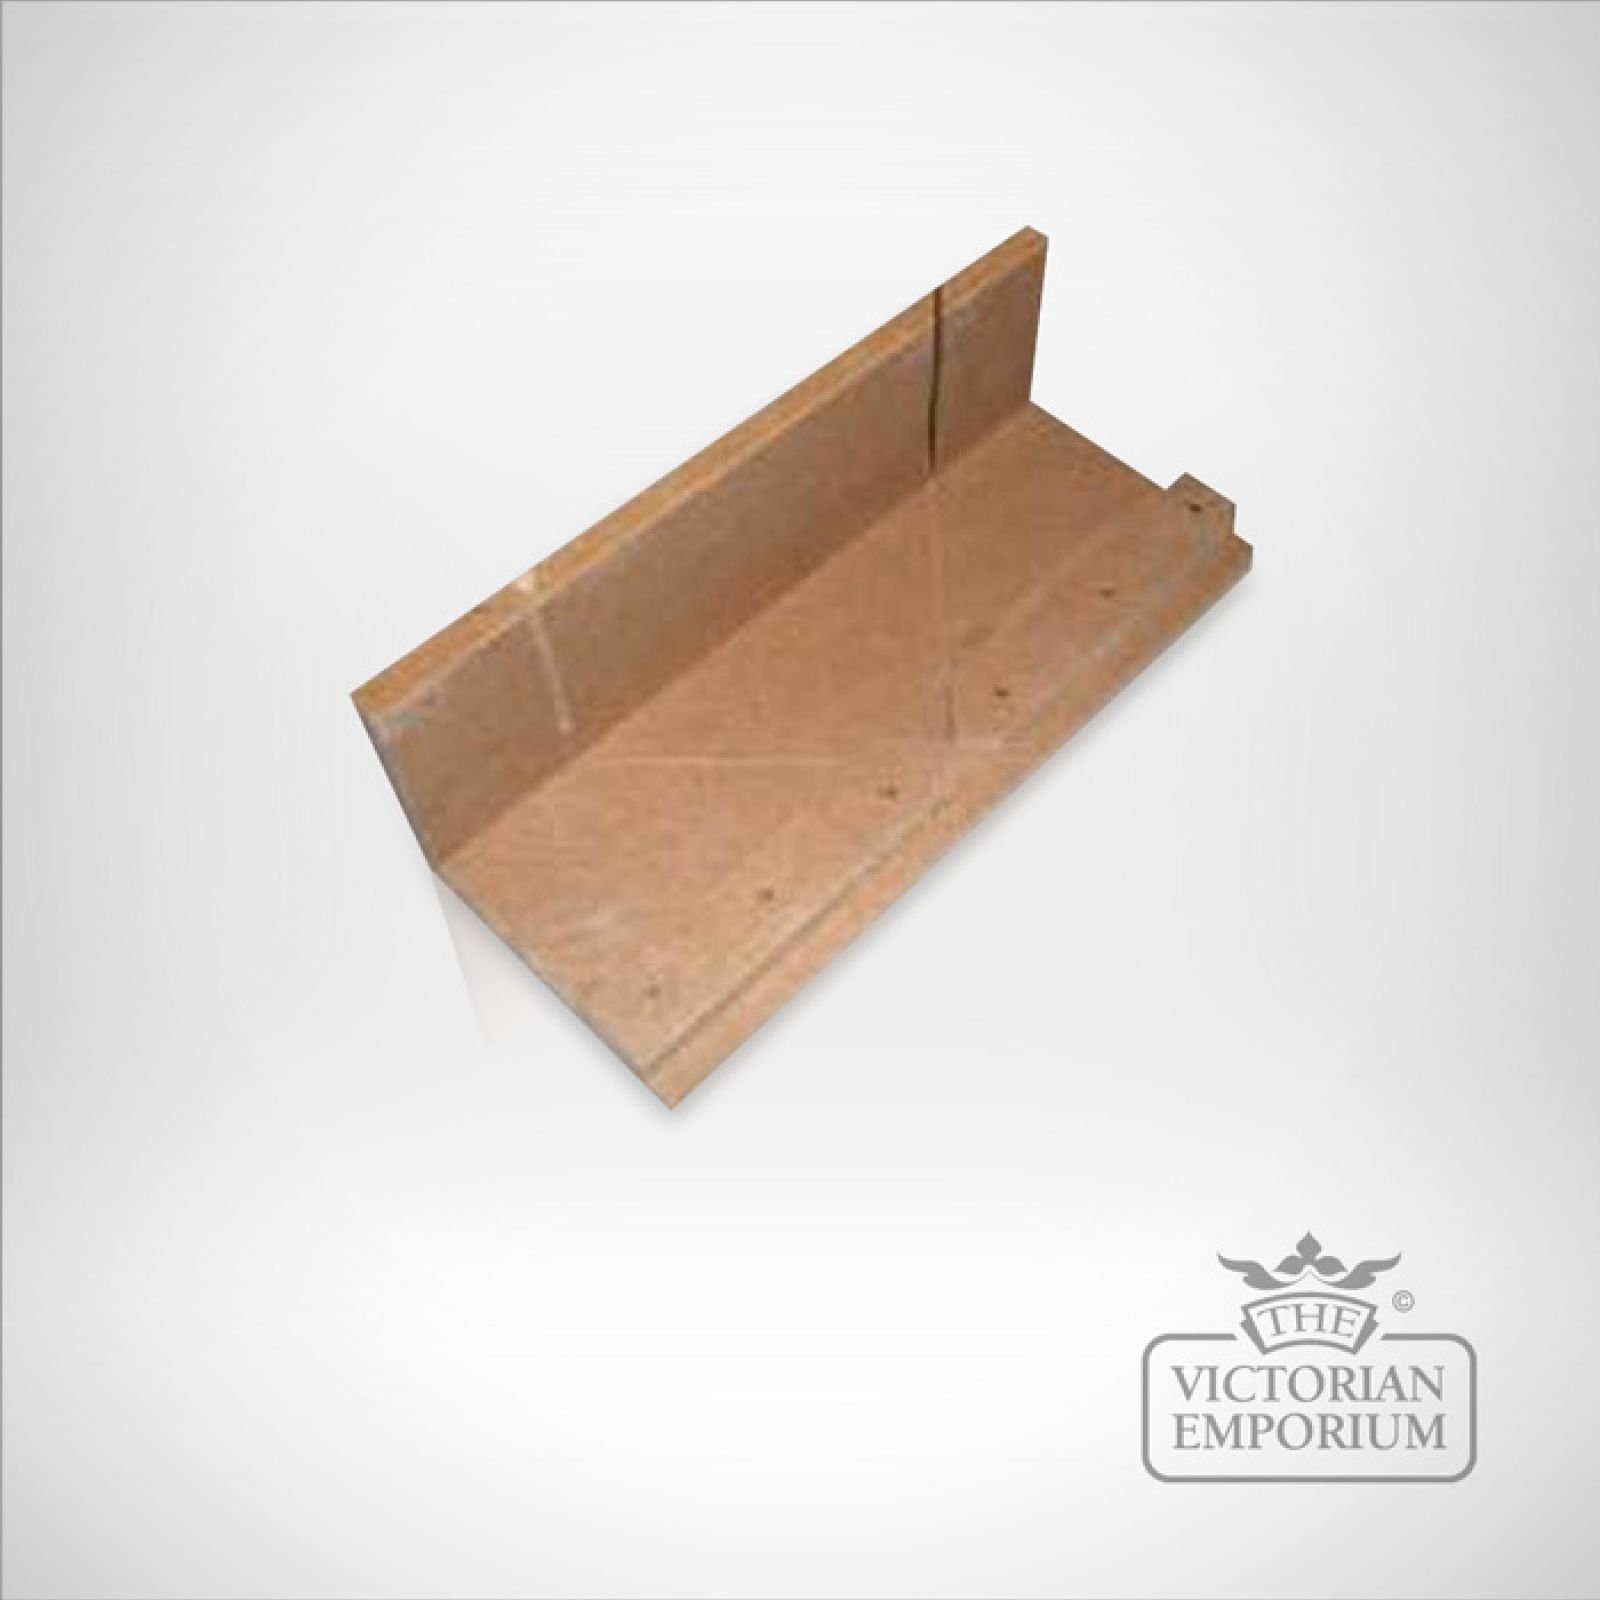 Mitre box for plaster mouldings